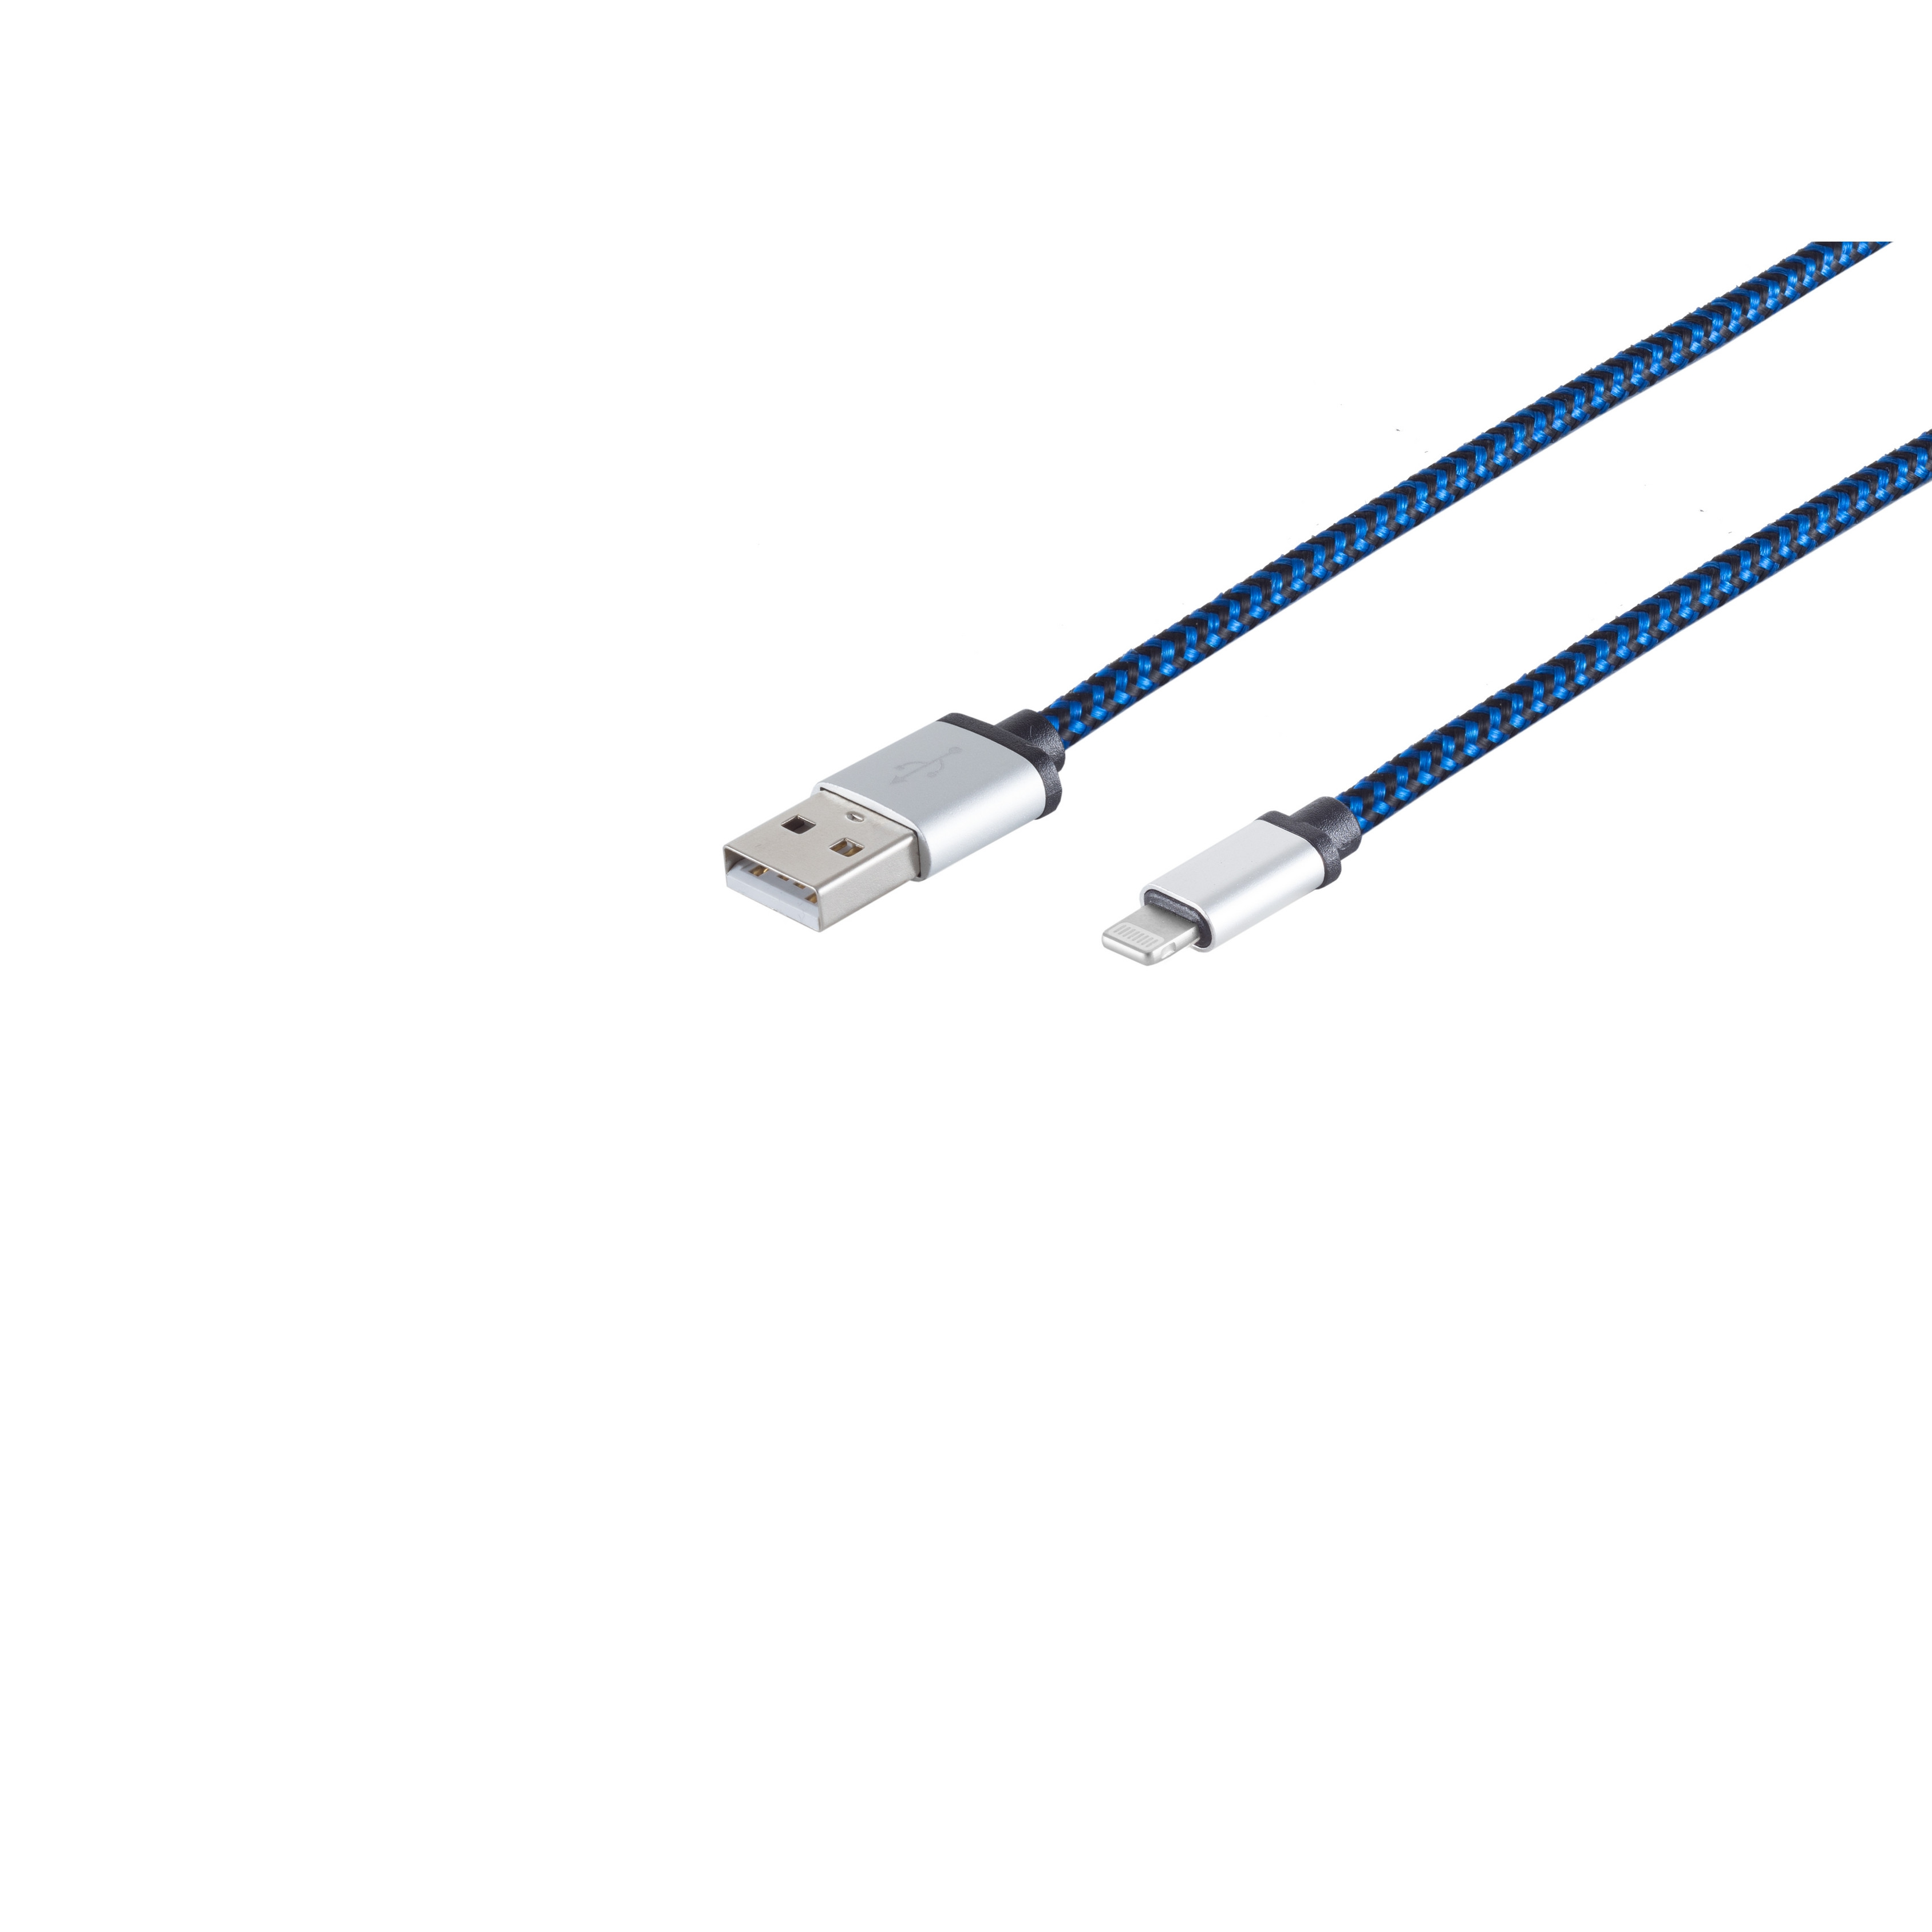 Stecker USB-Ladekabel Kabel blau 2m A CONNECTIVITY 8-pin S/CONN Stecker, USB MAXIMUM auf